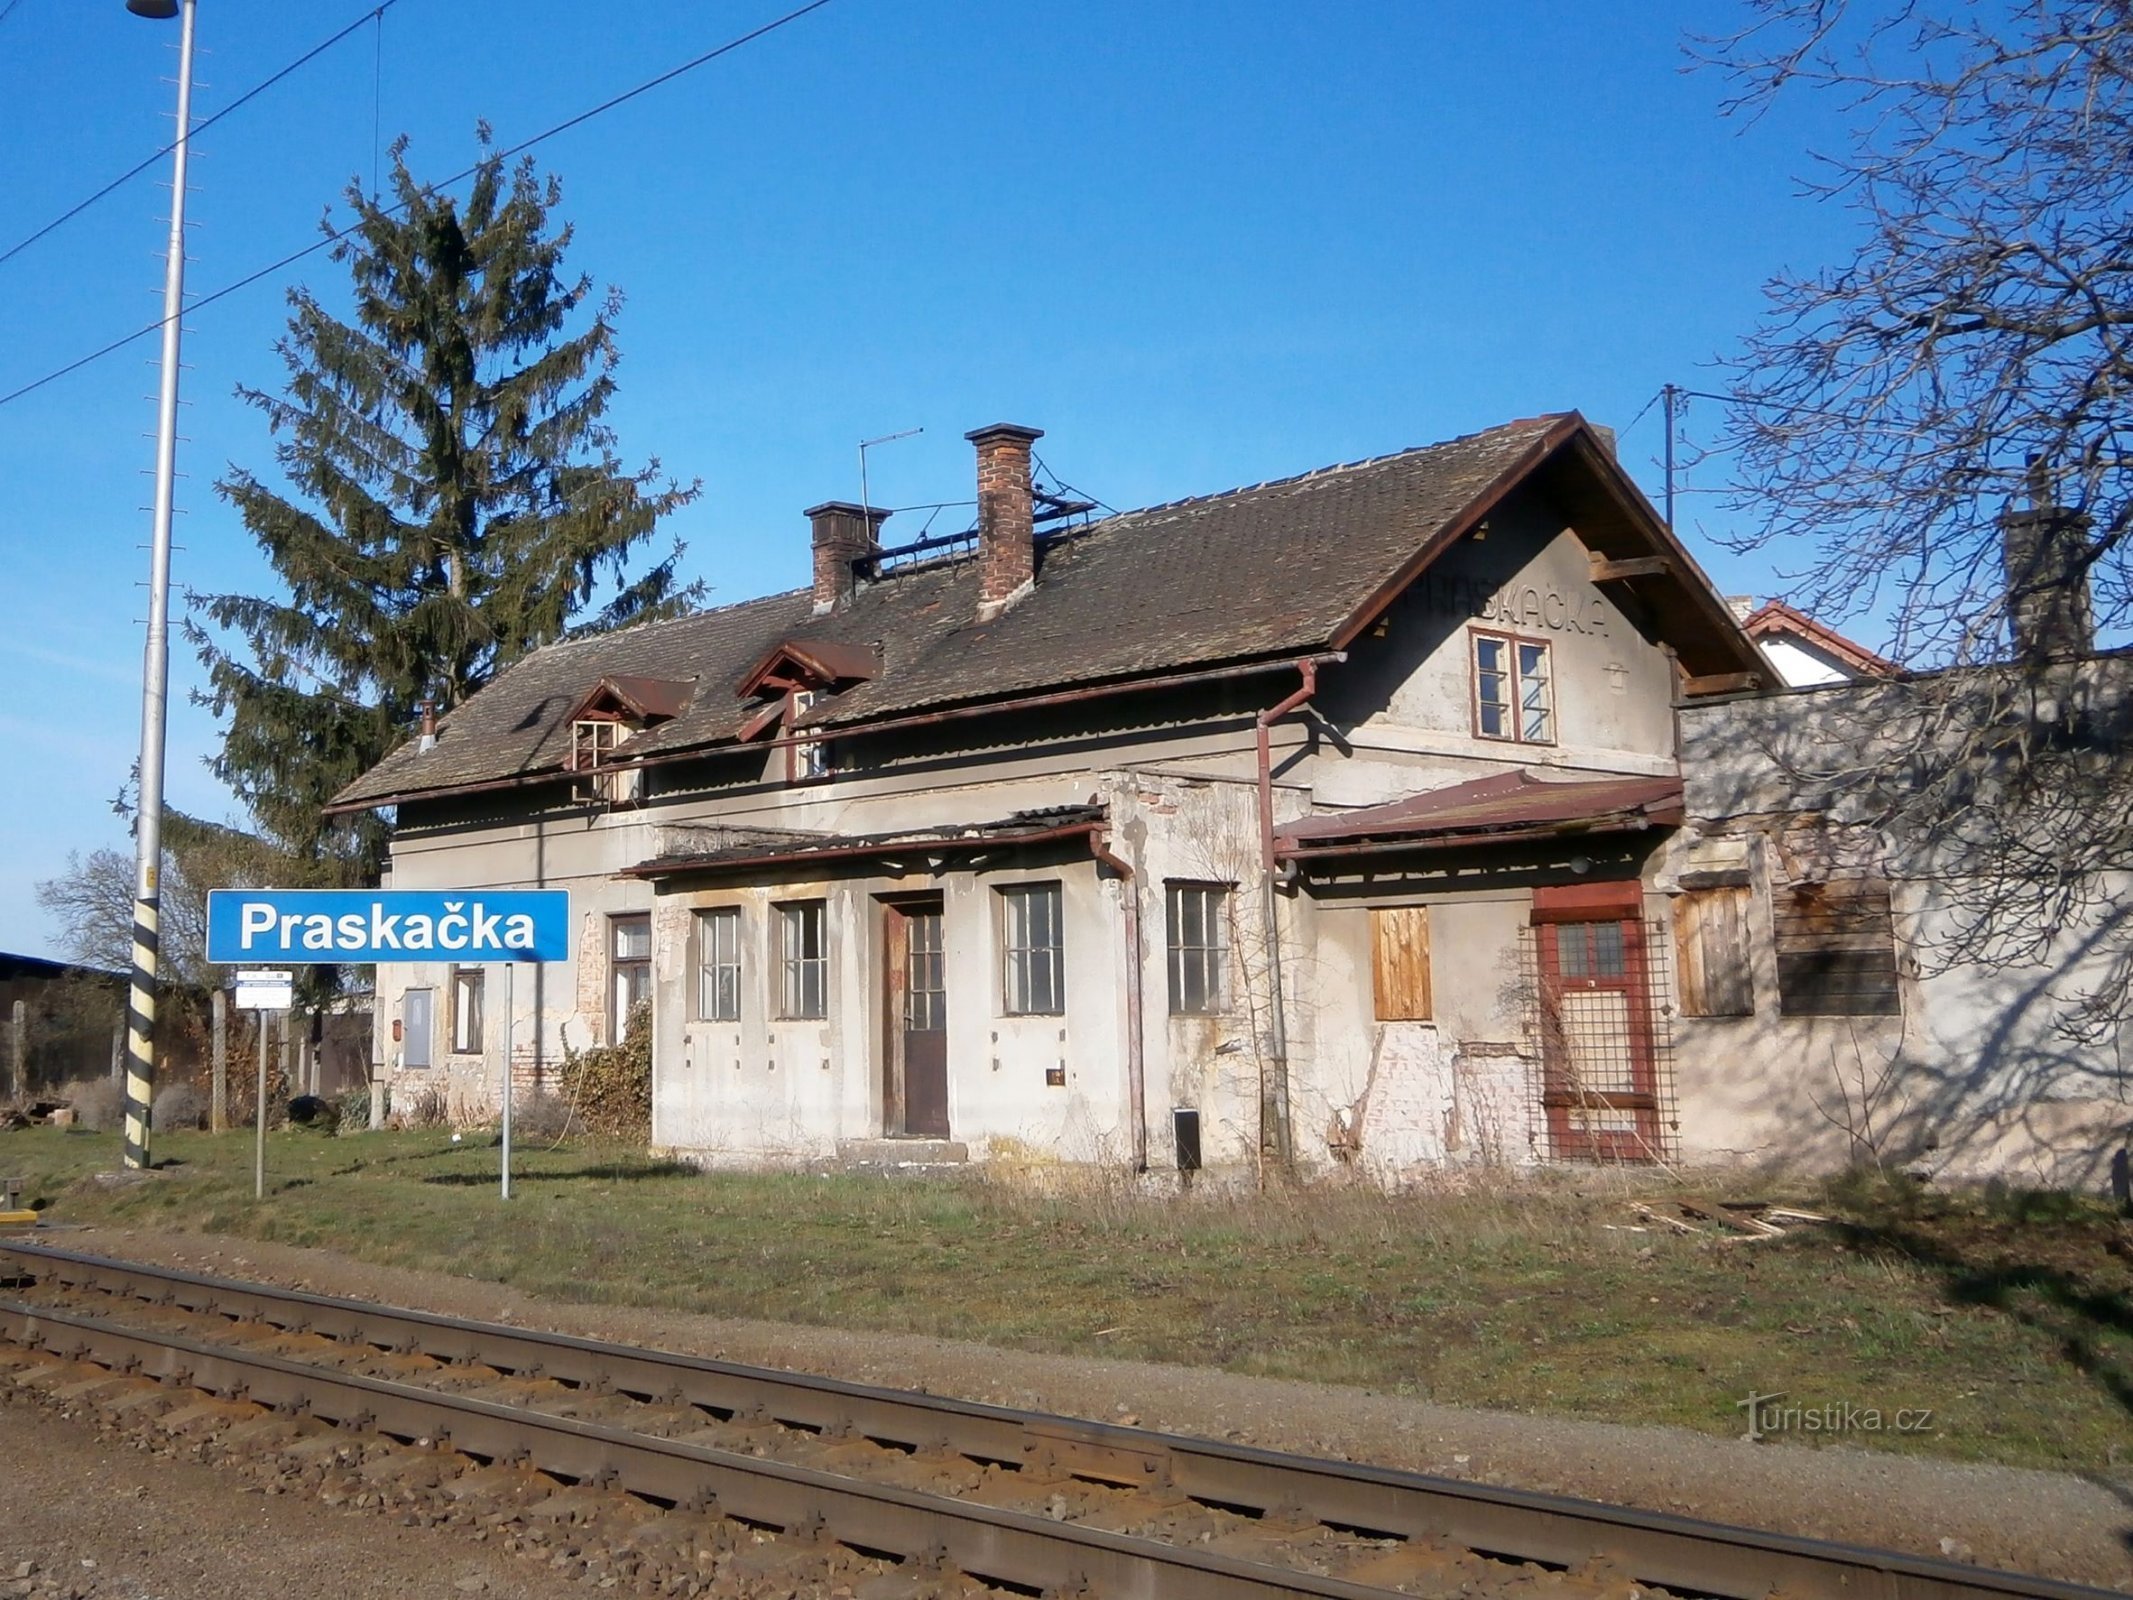 Allerede nedrevet gammel jernbanestation (Praskačka, 26.3.2017/XNUMX/XNUMX)